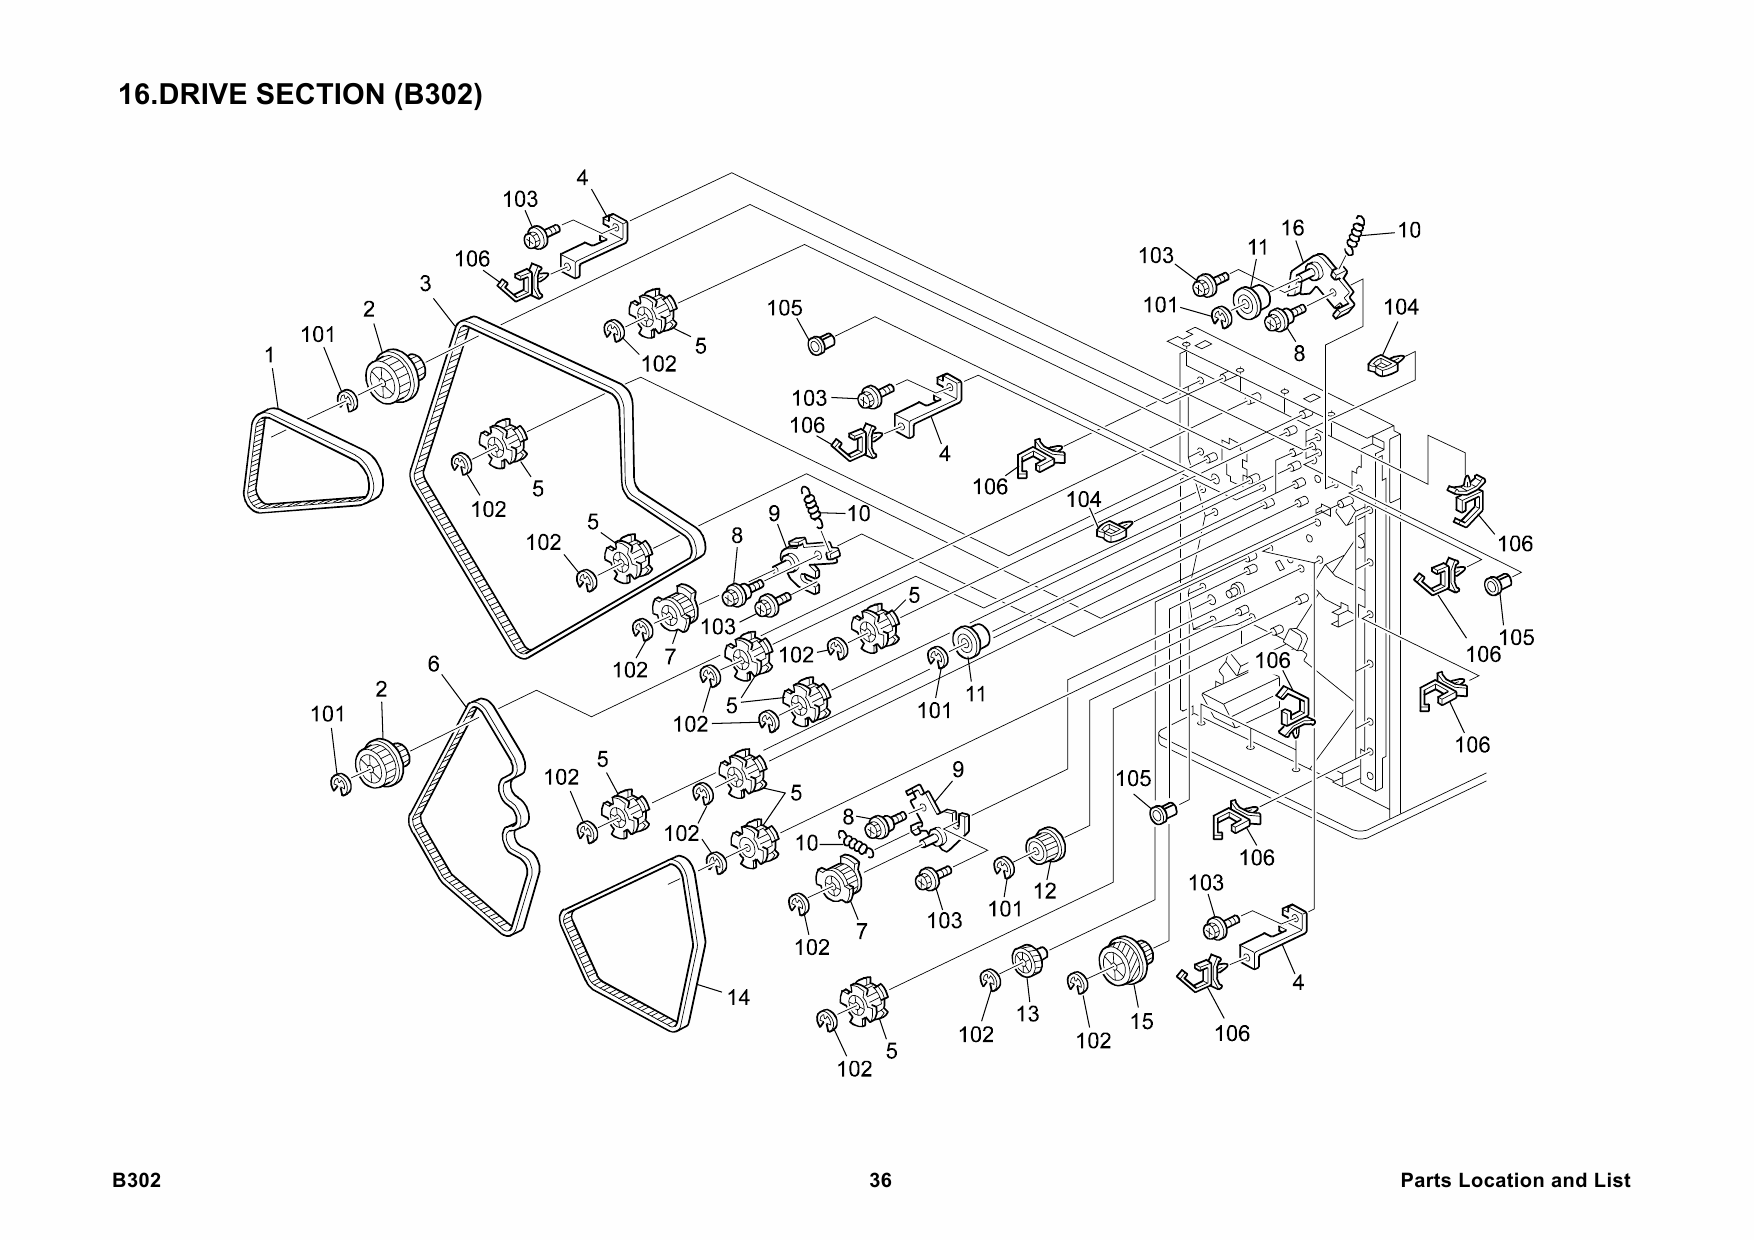 RICOH Options B302 3000-SHEET-FINISHER-SR810 Parts Catalog PDF download-5